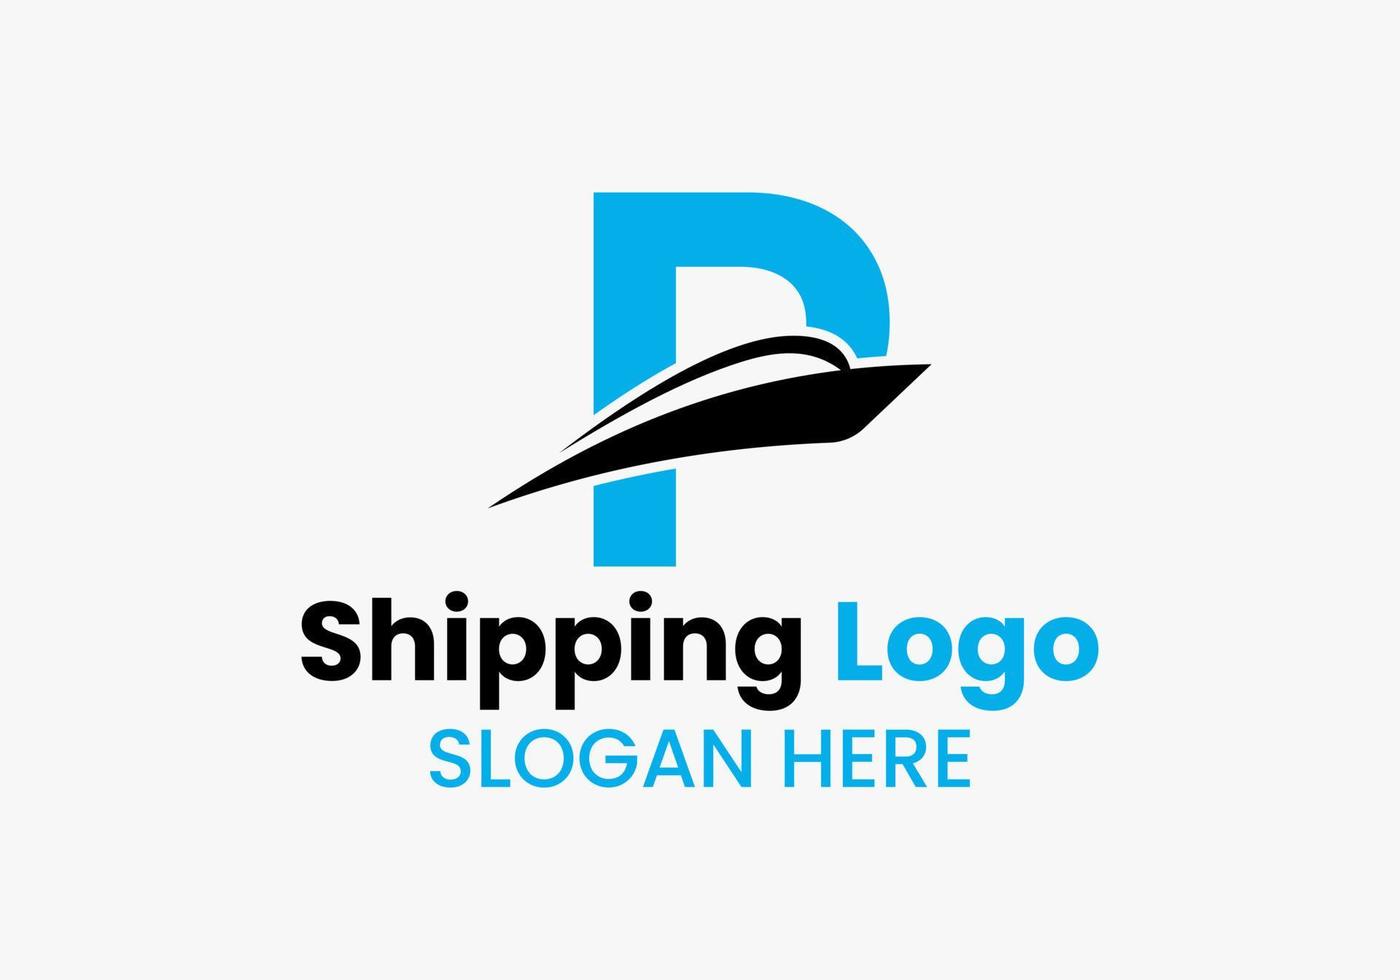 símbolo de veleiro de logotipo de remessa de letra p. ícone de barco à vela de navio náutico vetor